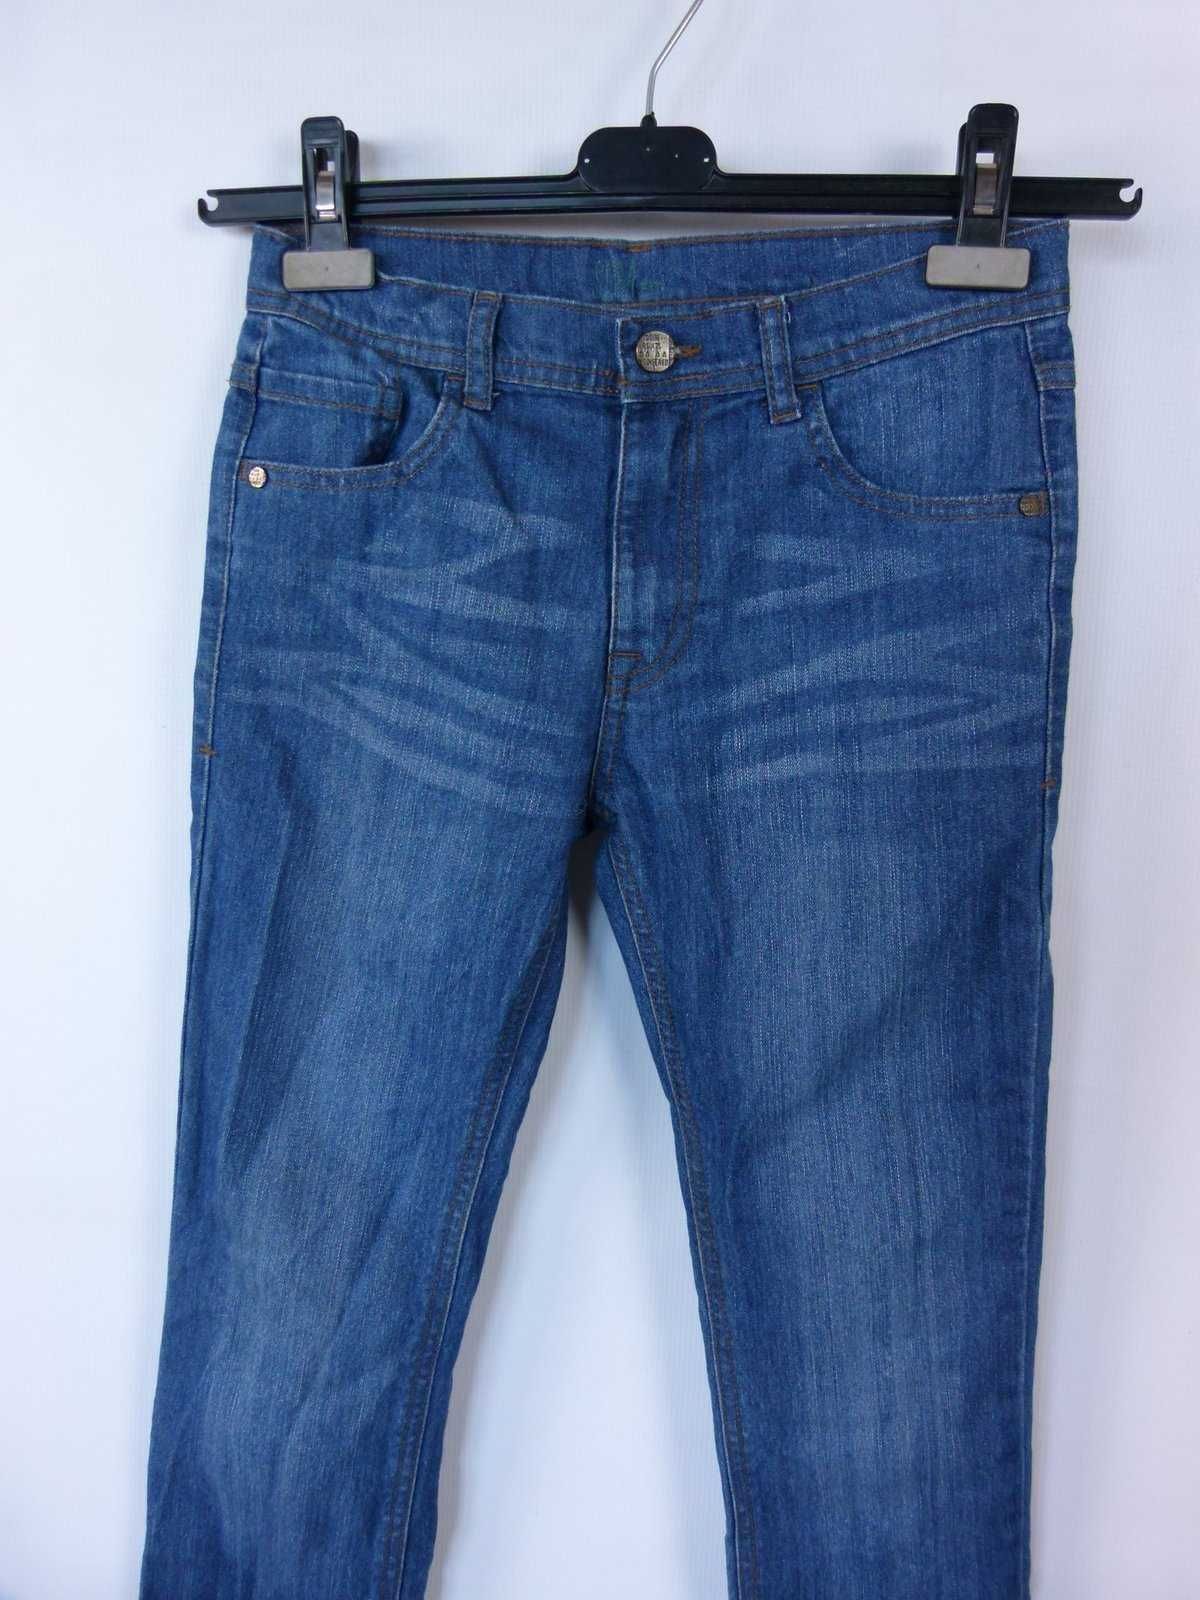 Marks Spencer spodnie jeans 10 - 11 lat / 146 cm